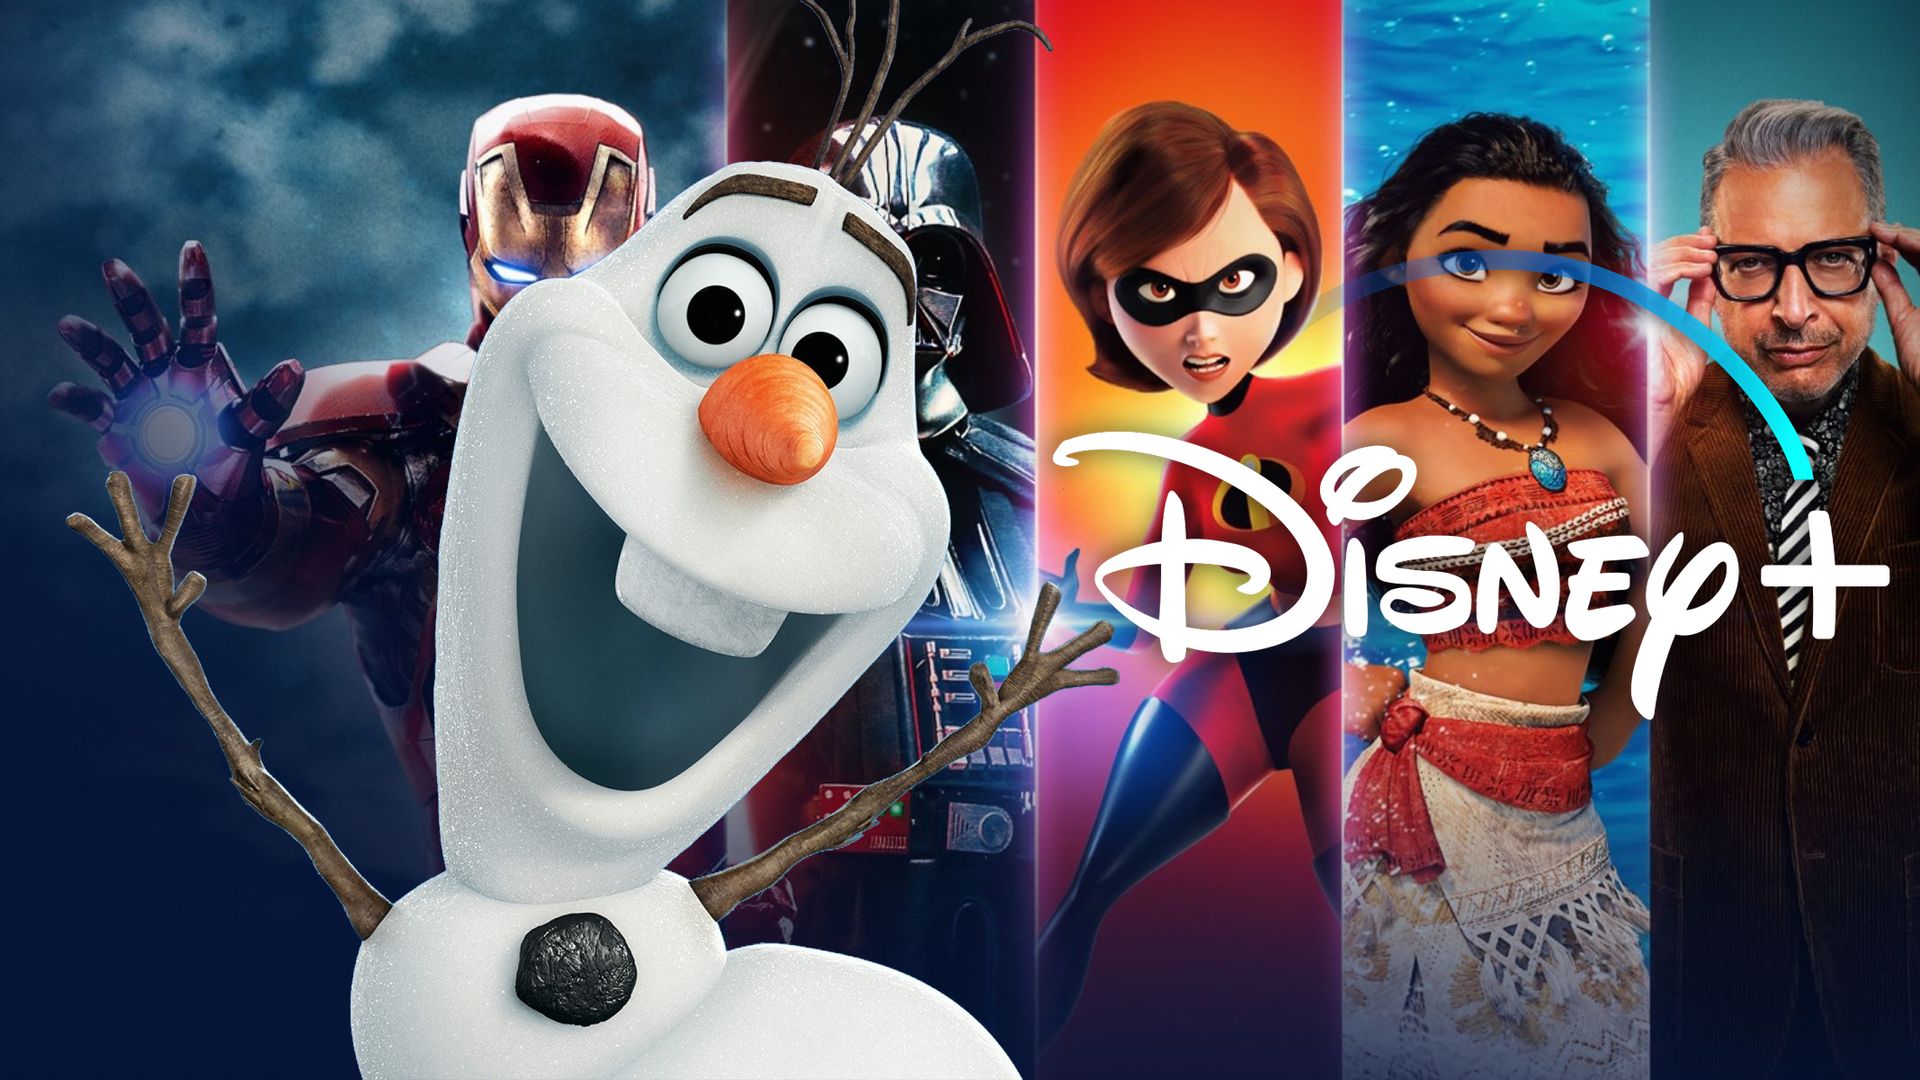 Disney Plus Full launch lineup for Disney+ UK revealed! T3